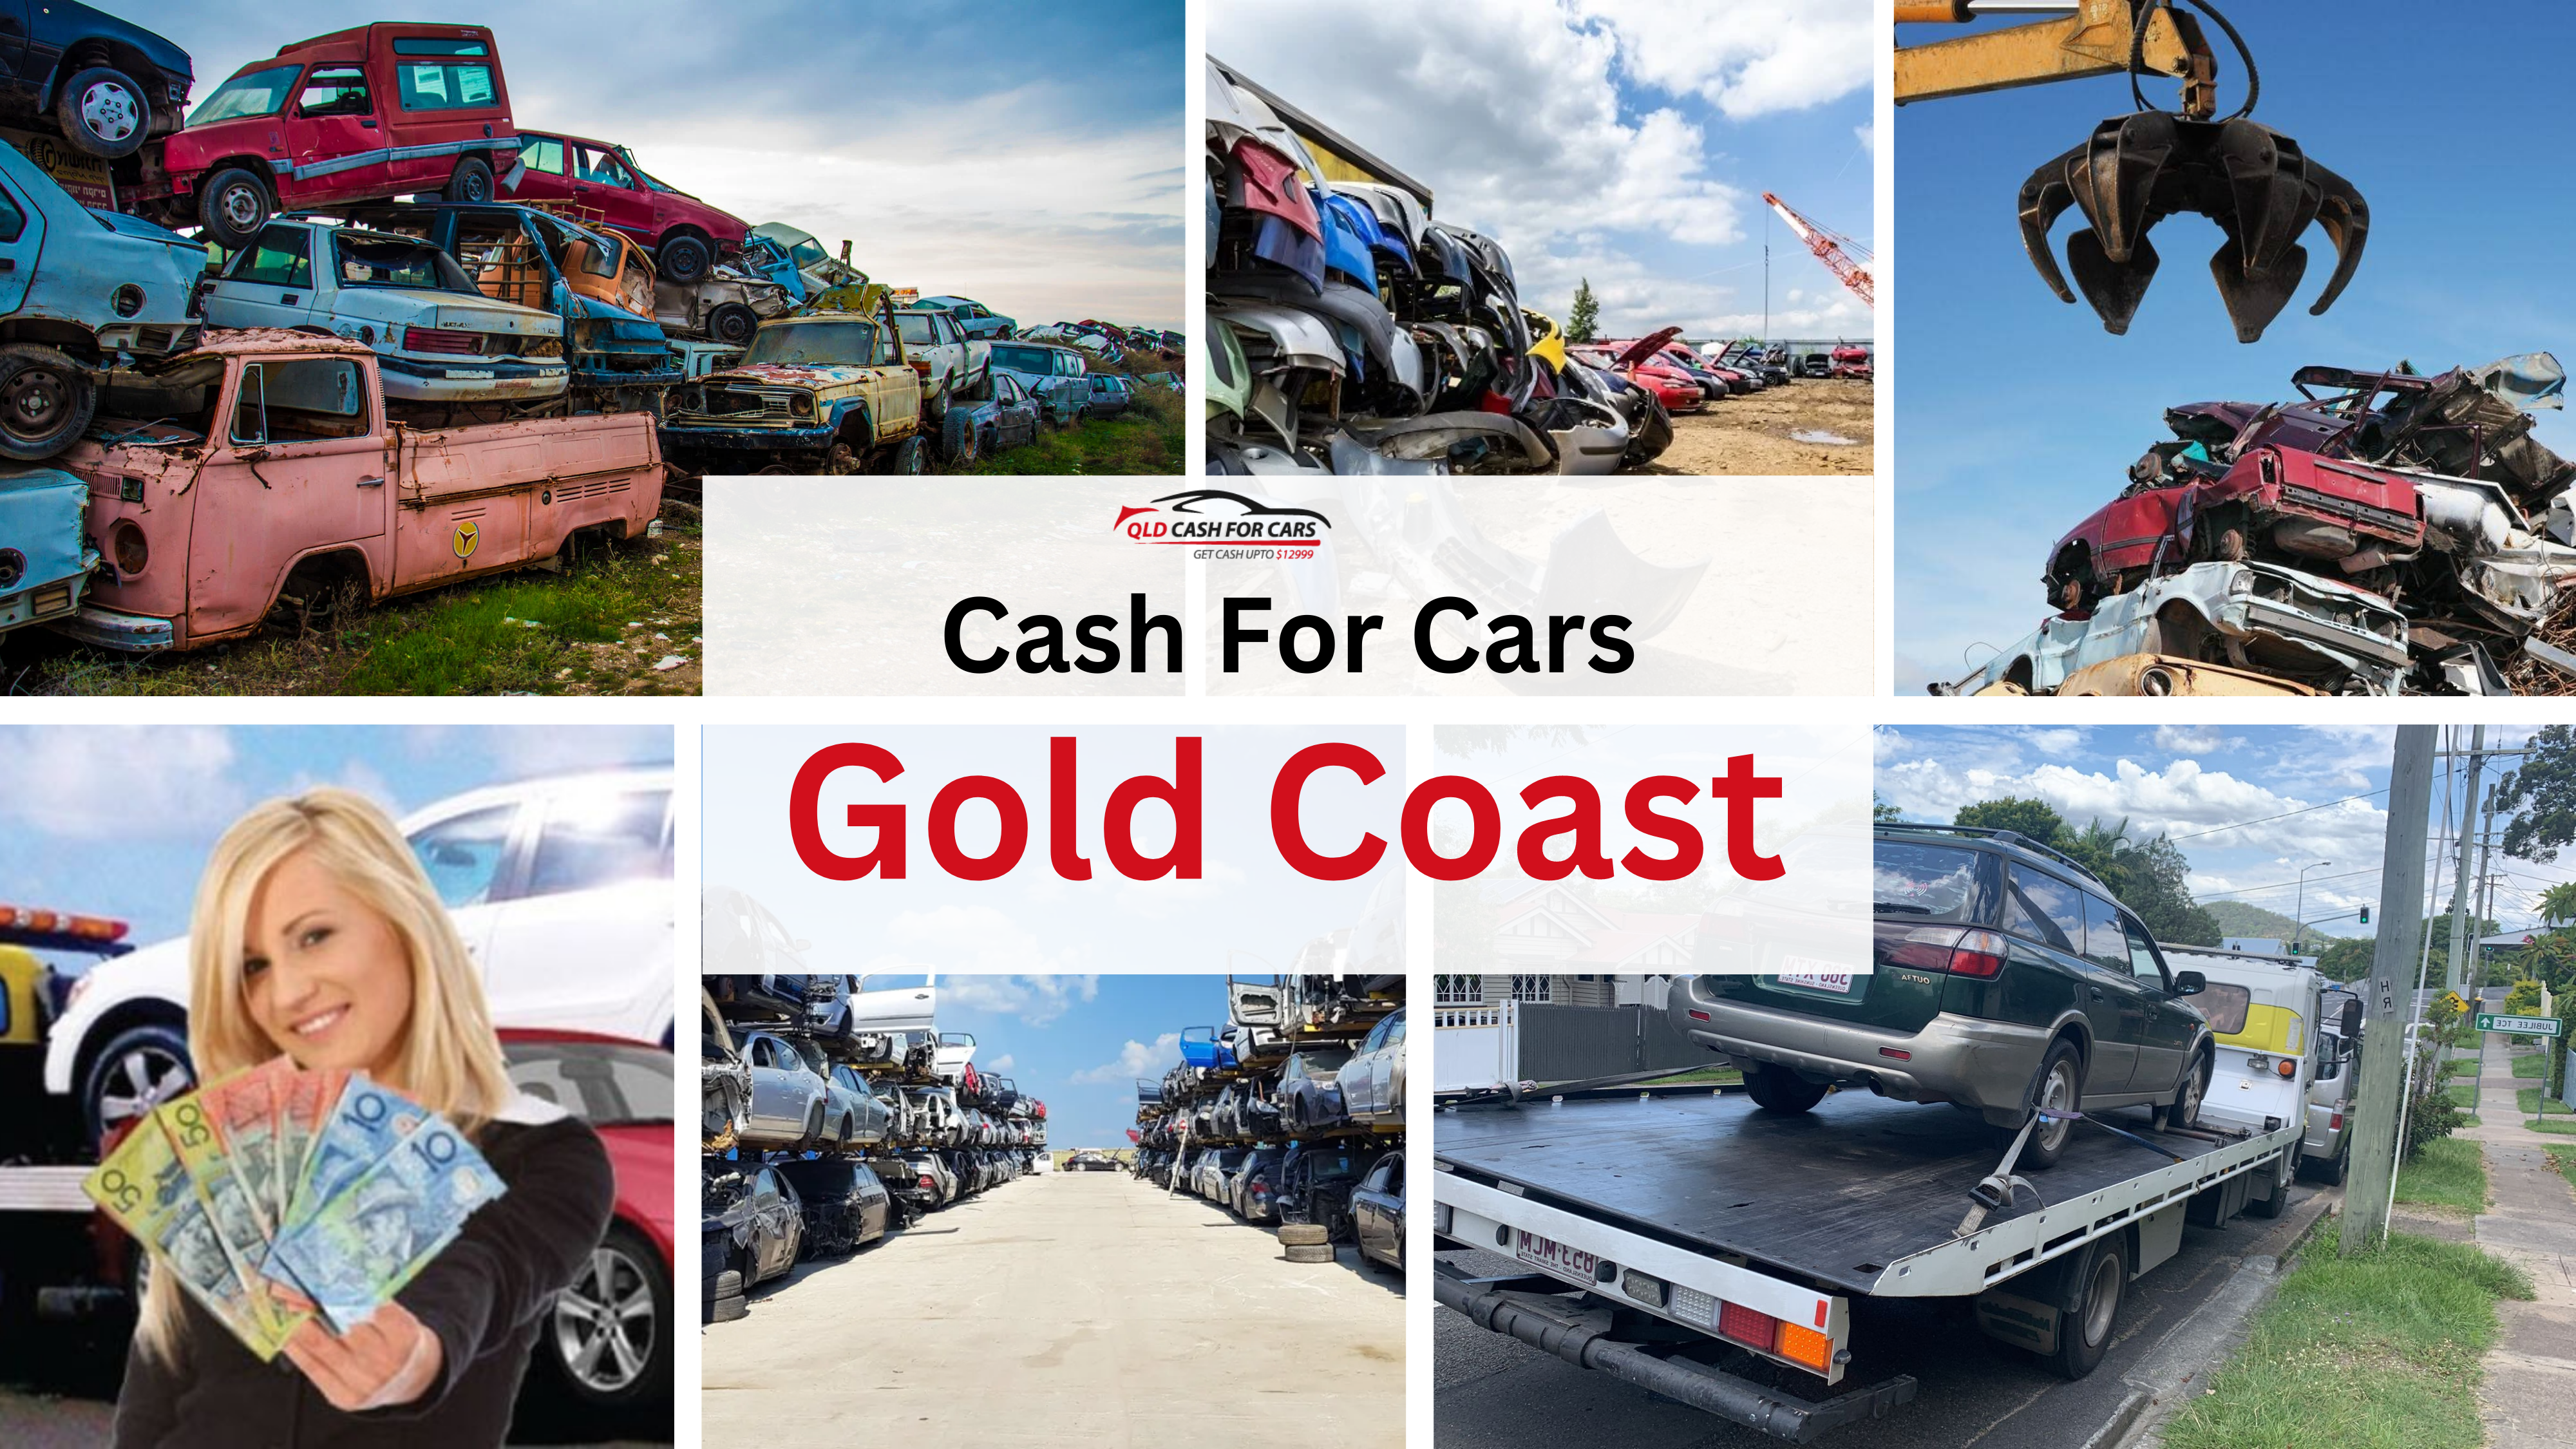 Cash For Cars Gold Coast with Qldcashforcars.com.au